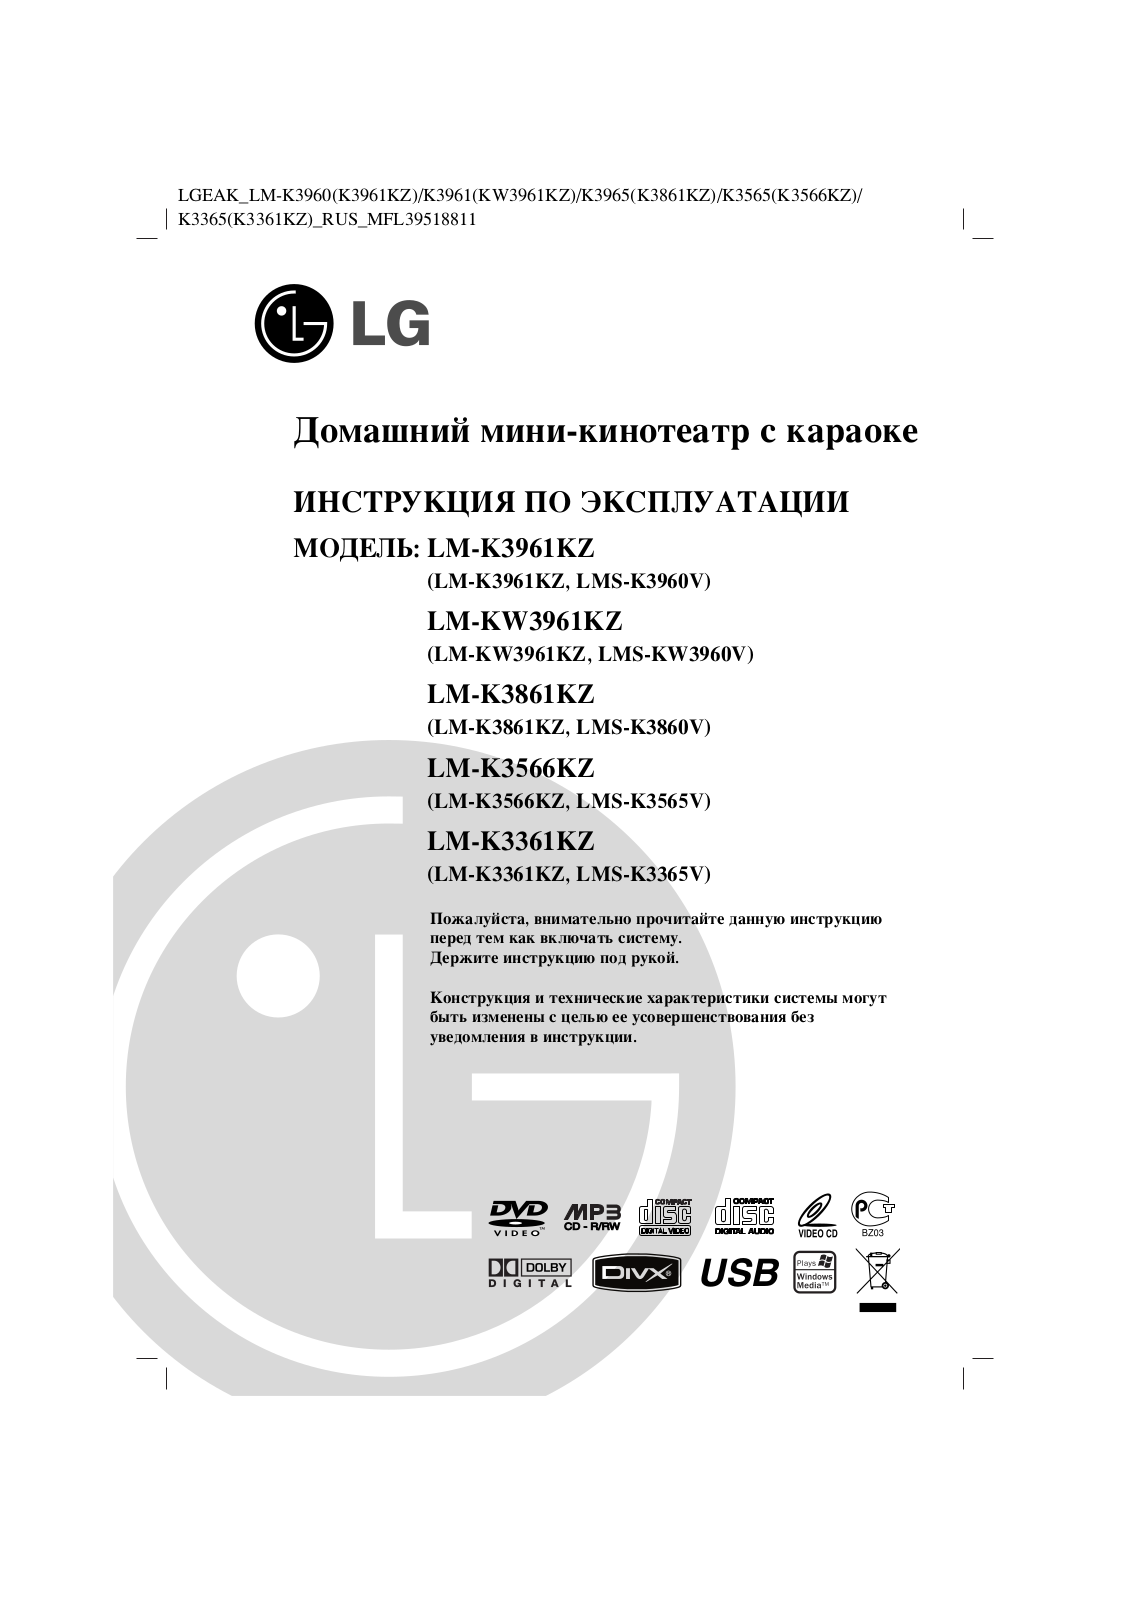 LG LM-K3566KZ User Manual